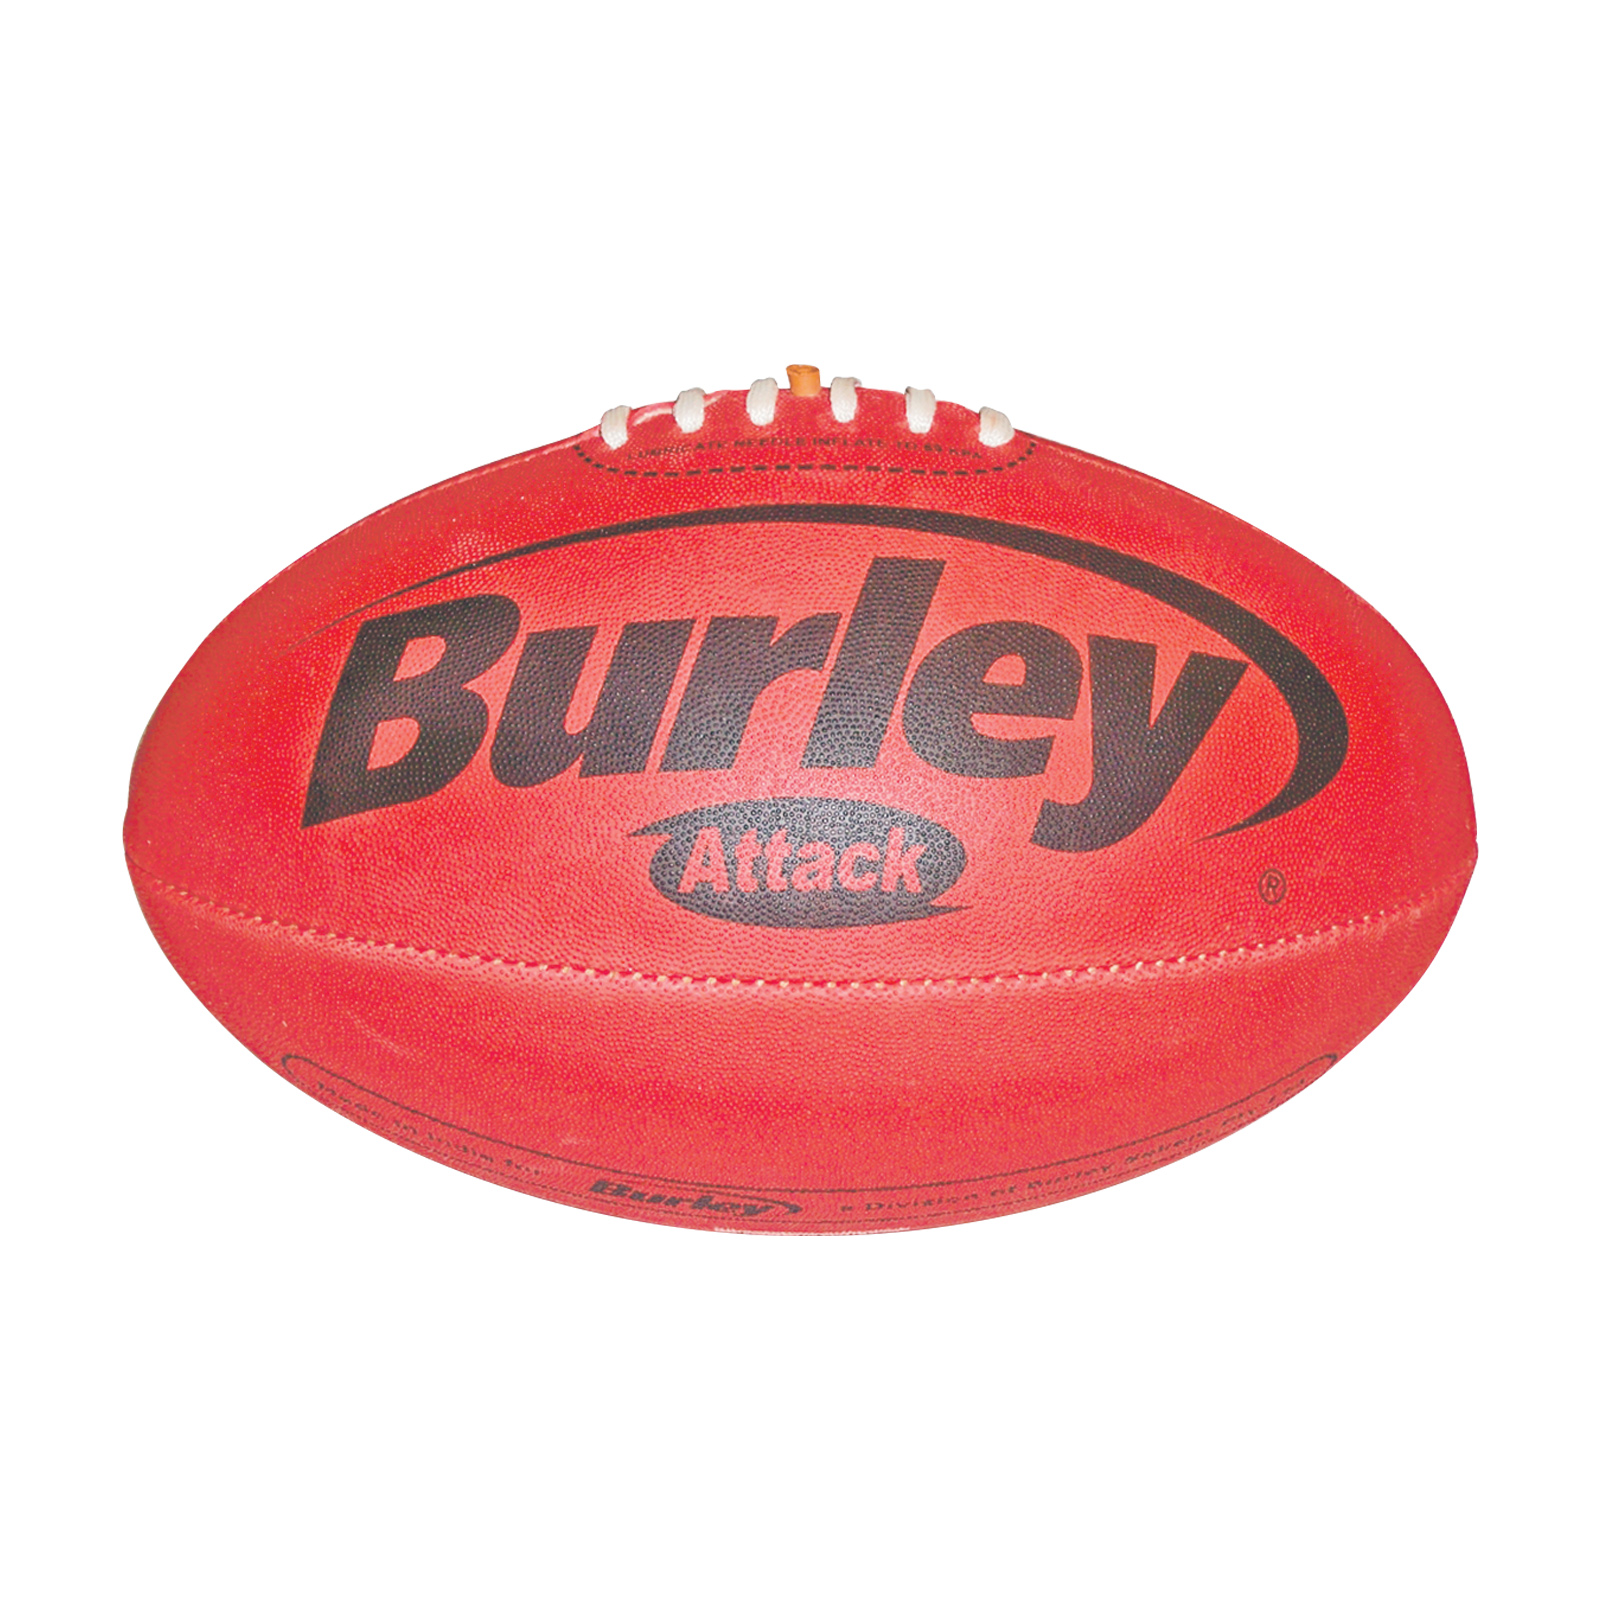 Burley Attack Football Full Size